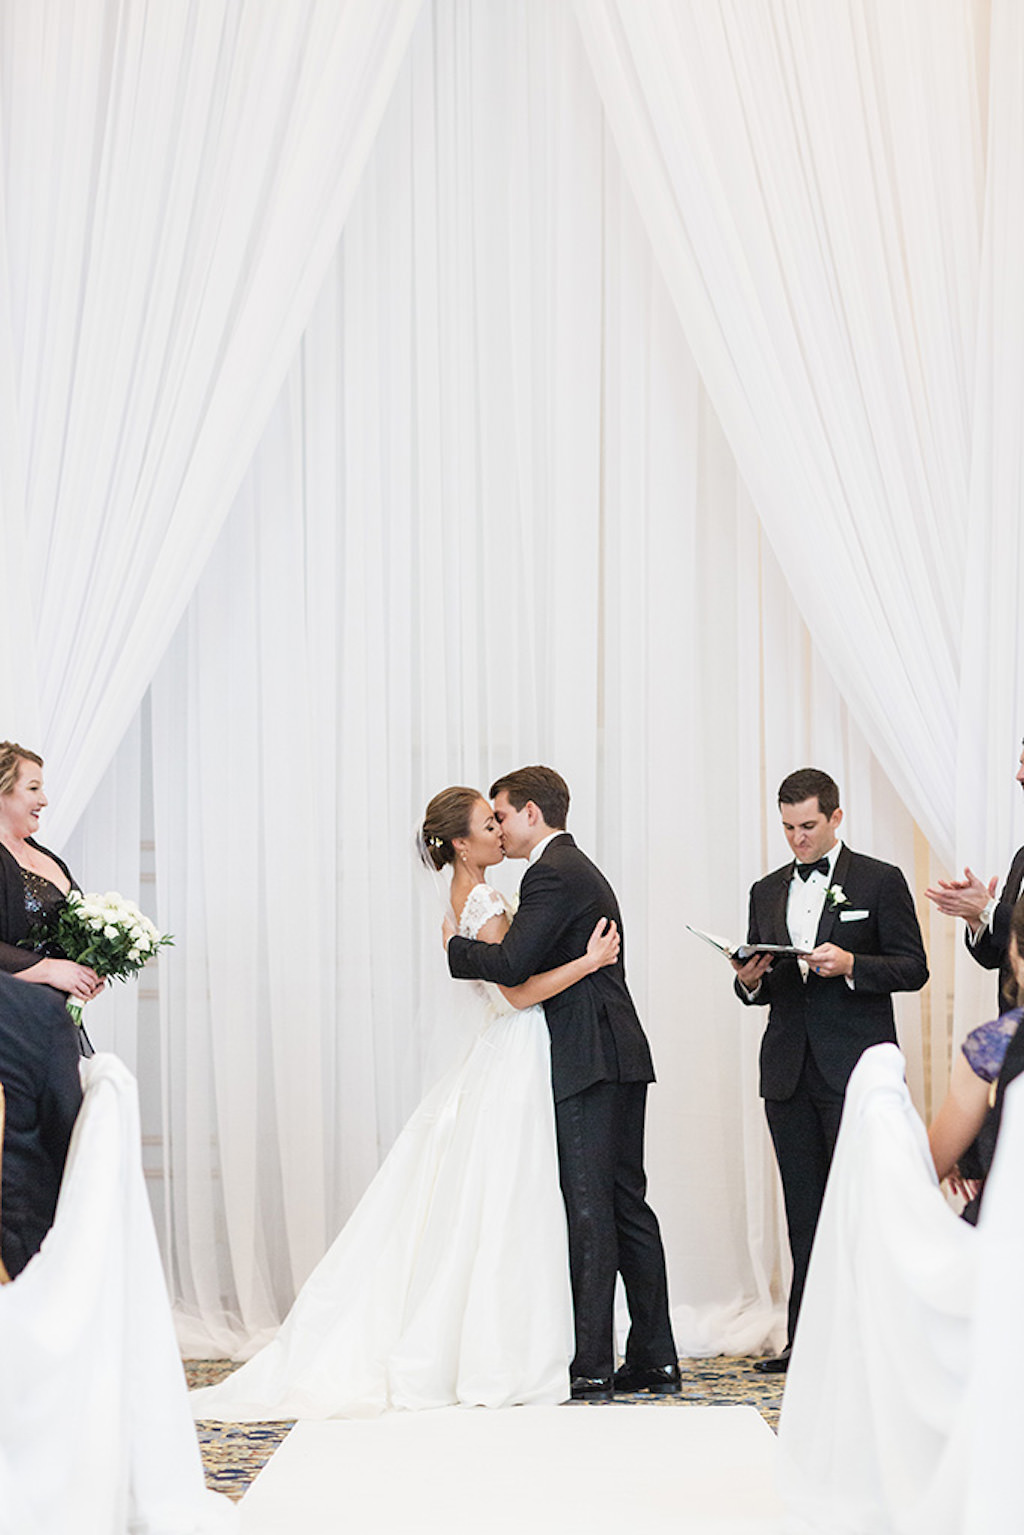 Elegant, Classic Florida Bride and Groom, Tampa Ballroom Wedding Ceremony, White Draping Backdrop